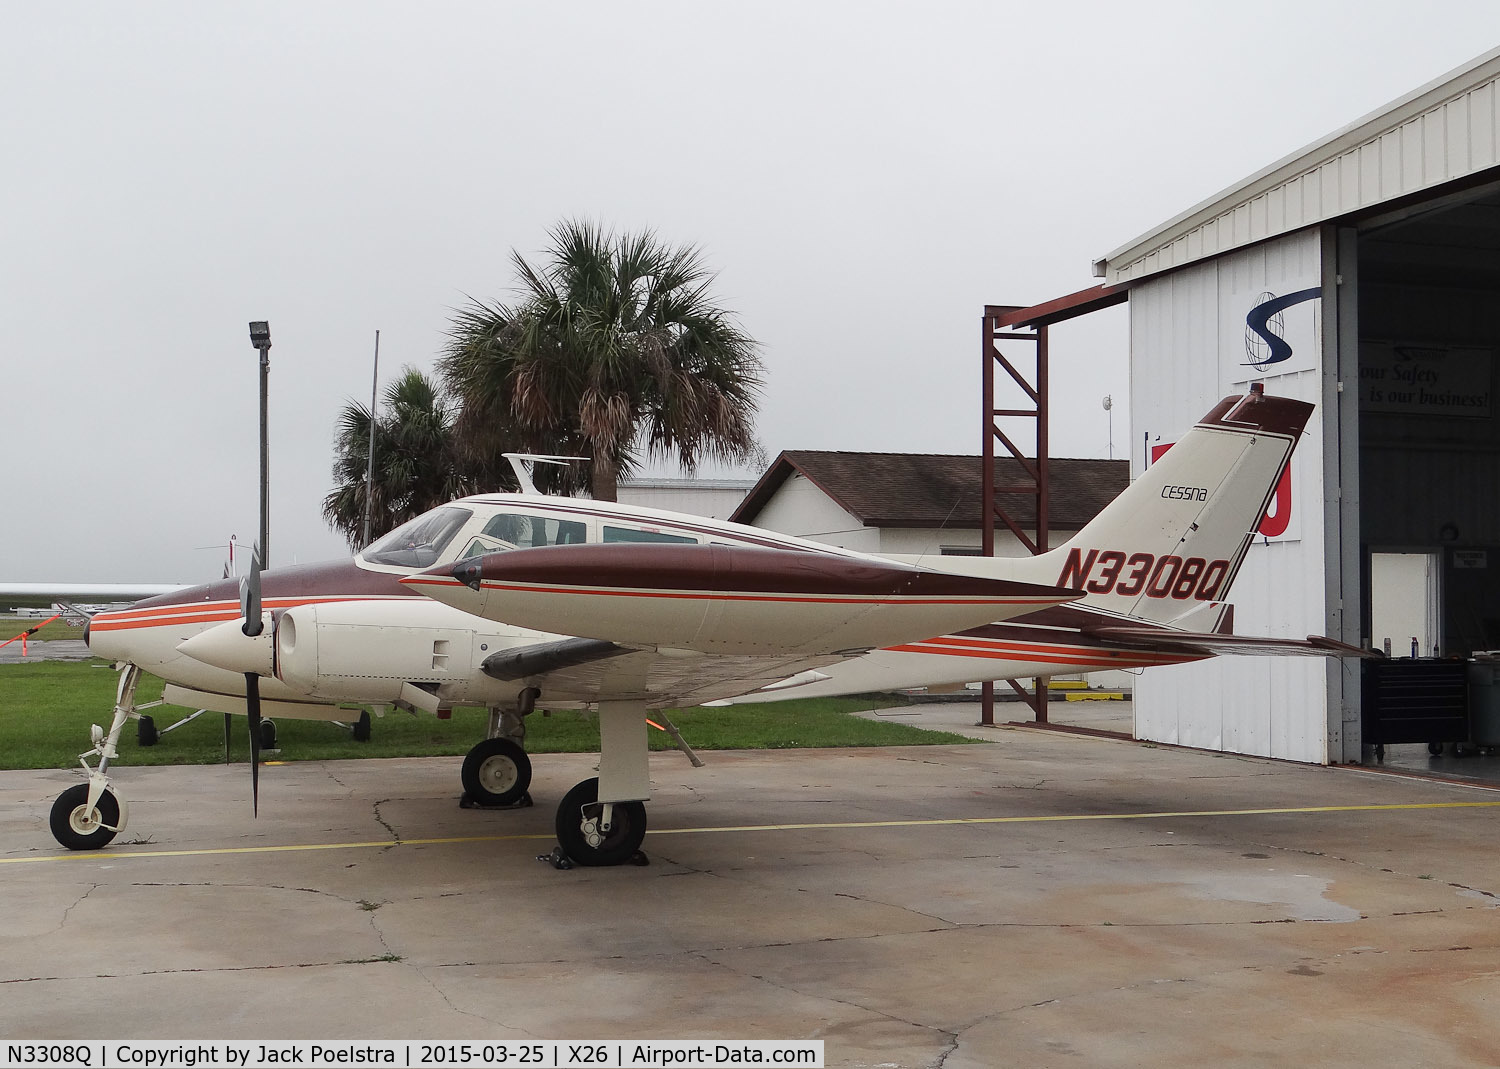 N3308Q, 1966 Cessna 320D Executive Skyknight C/N 320D0108, N3308Q at Sebastian airport FL